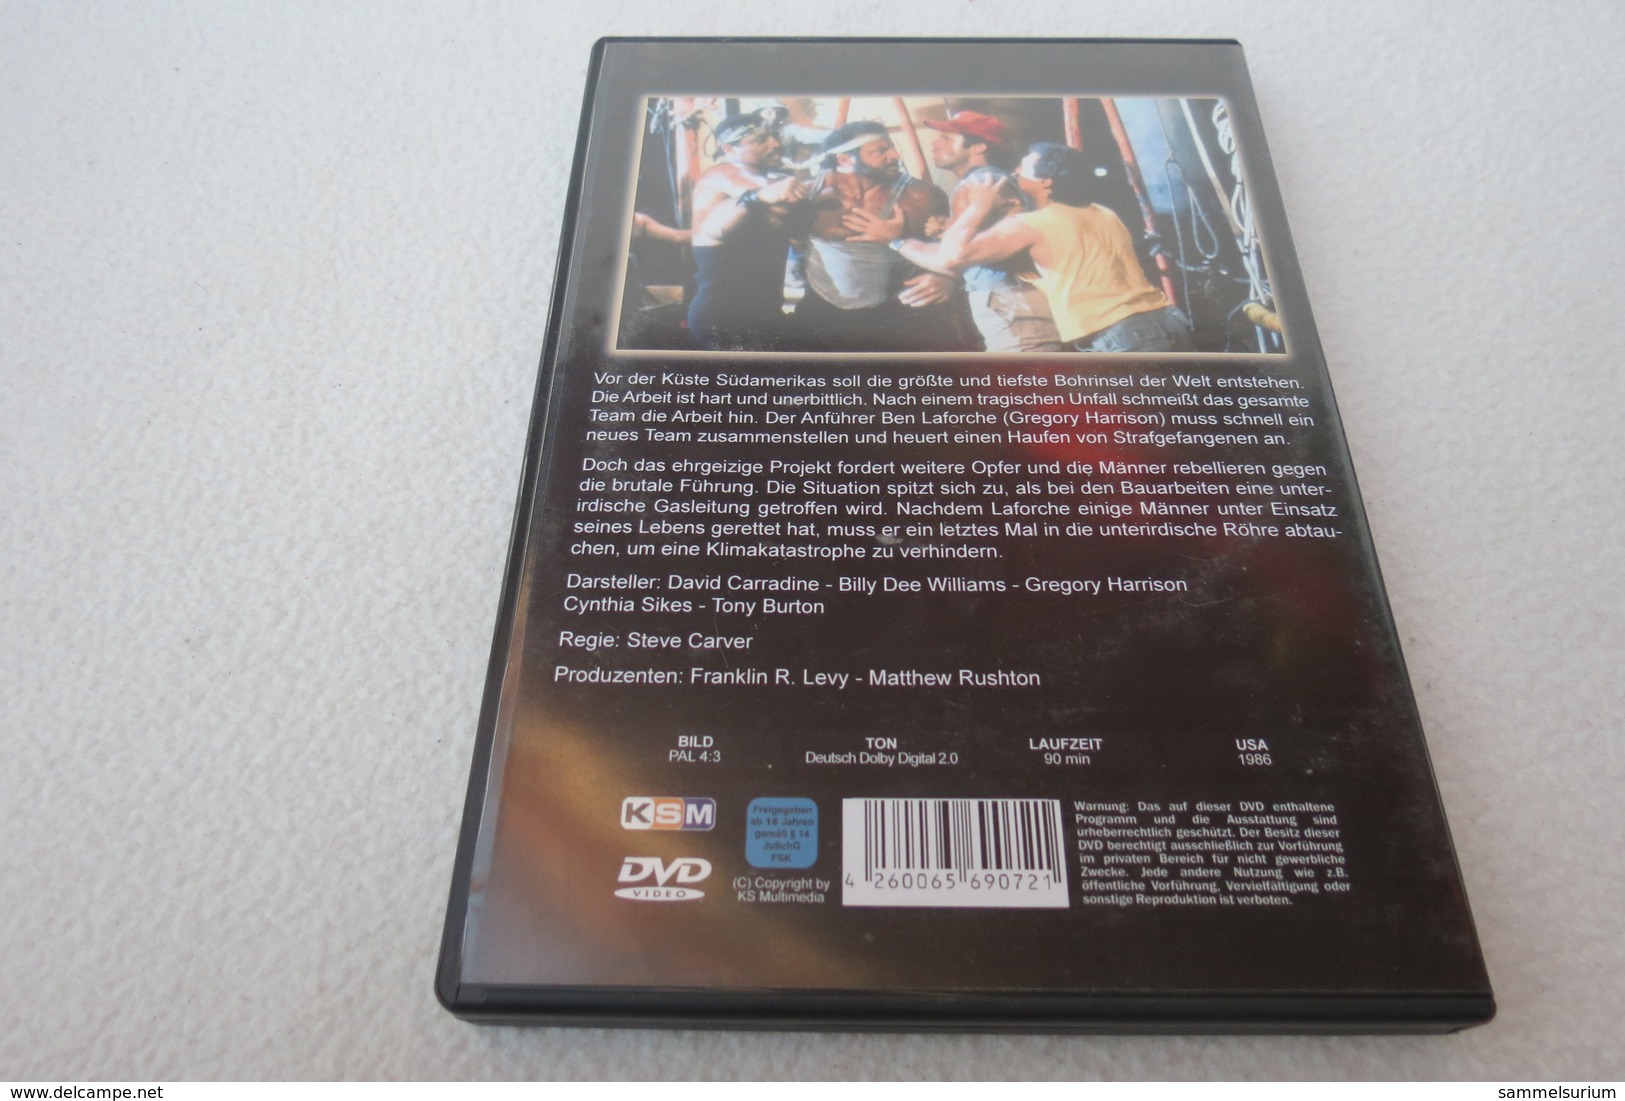 DVD "Verwegene Hunde" David Carradine, Gregory Harrison, Billy Dee Williams - Musik-DVD's